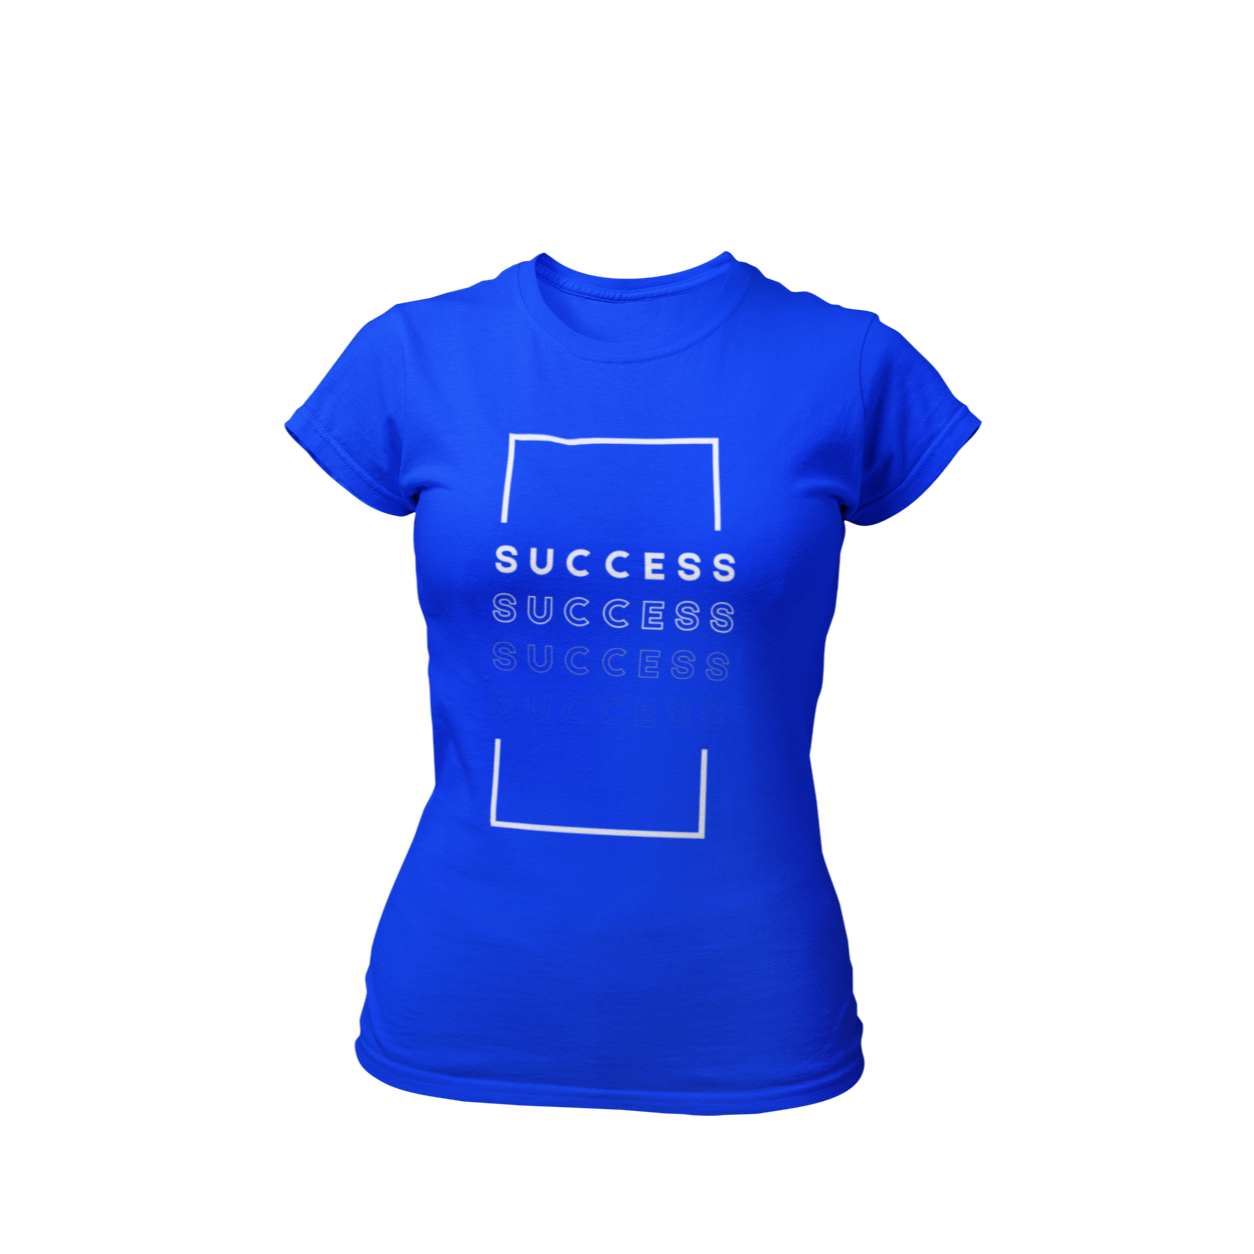 Royal Blue Women's Layered Success Shirt by Made Inc 